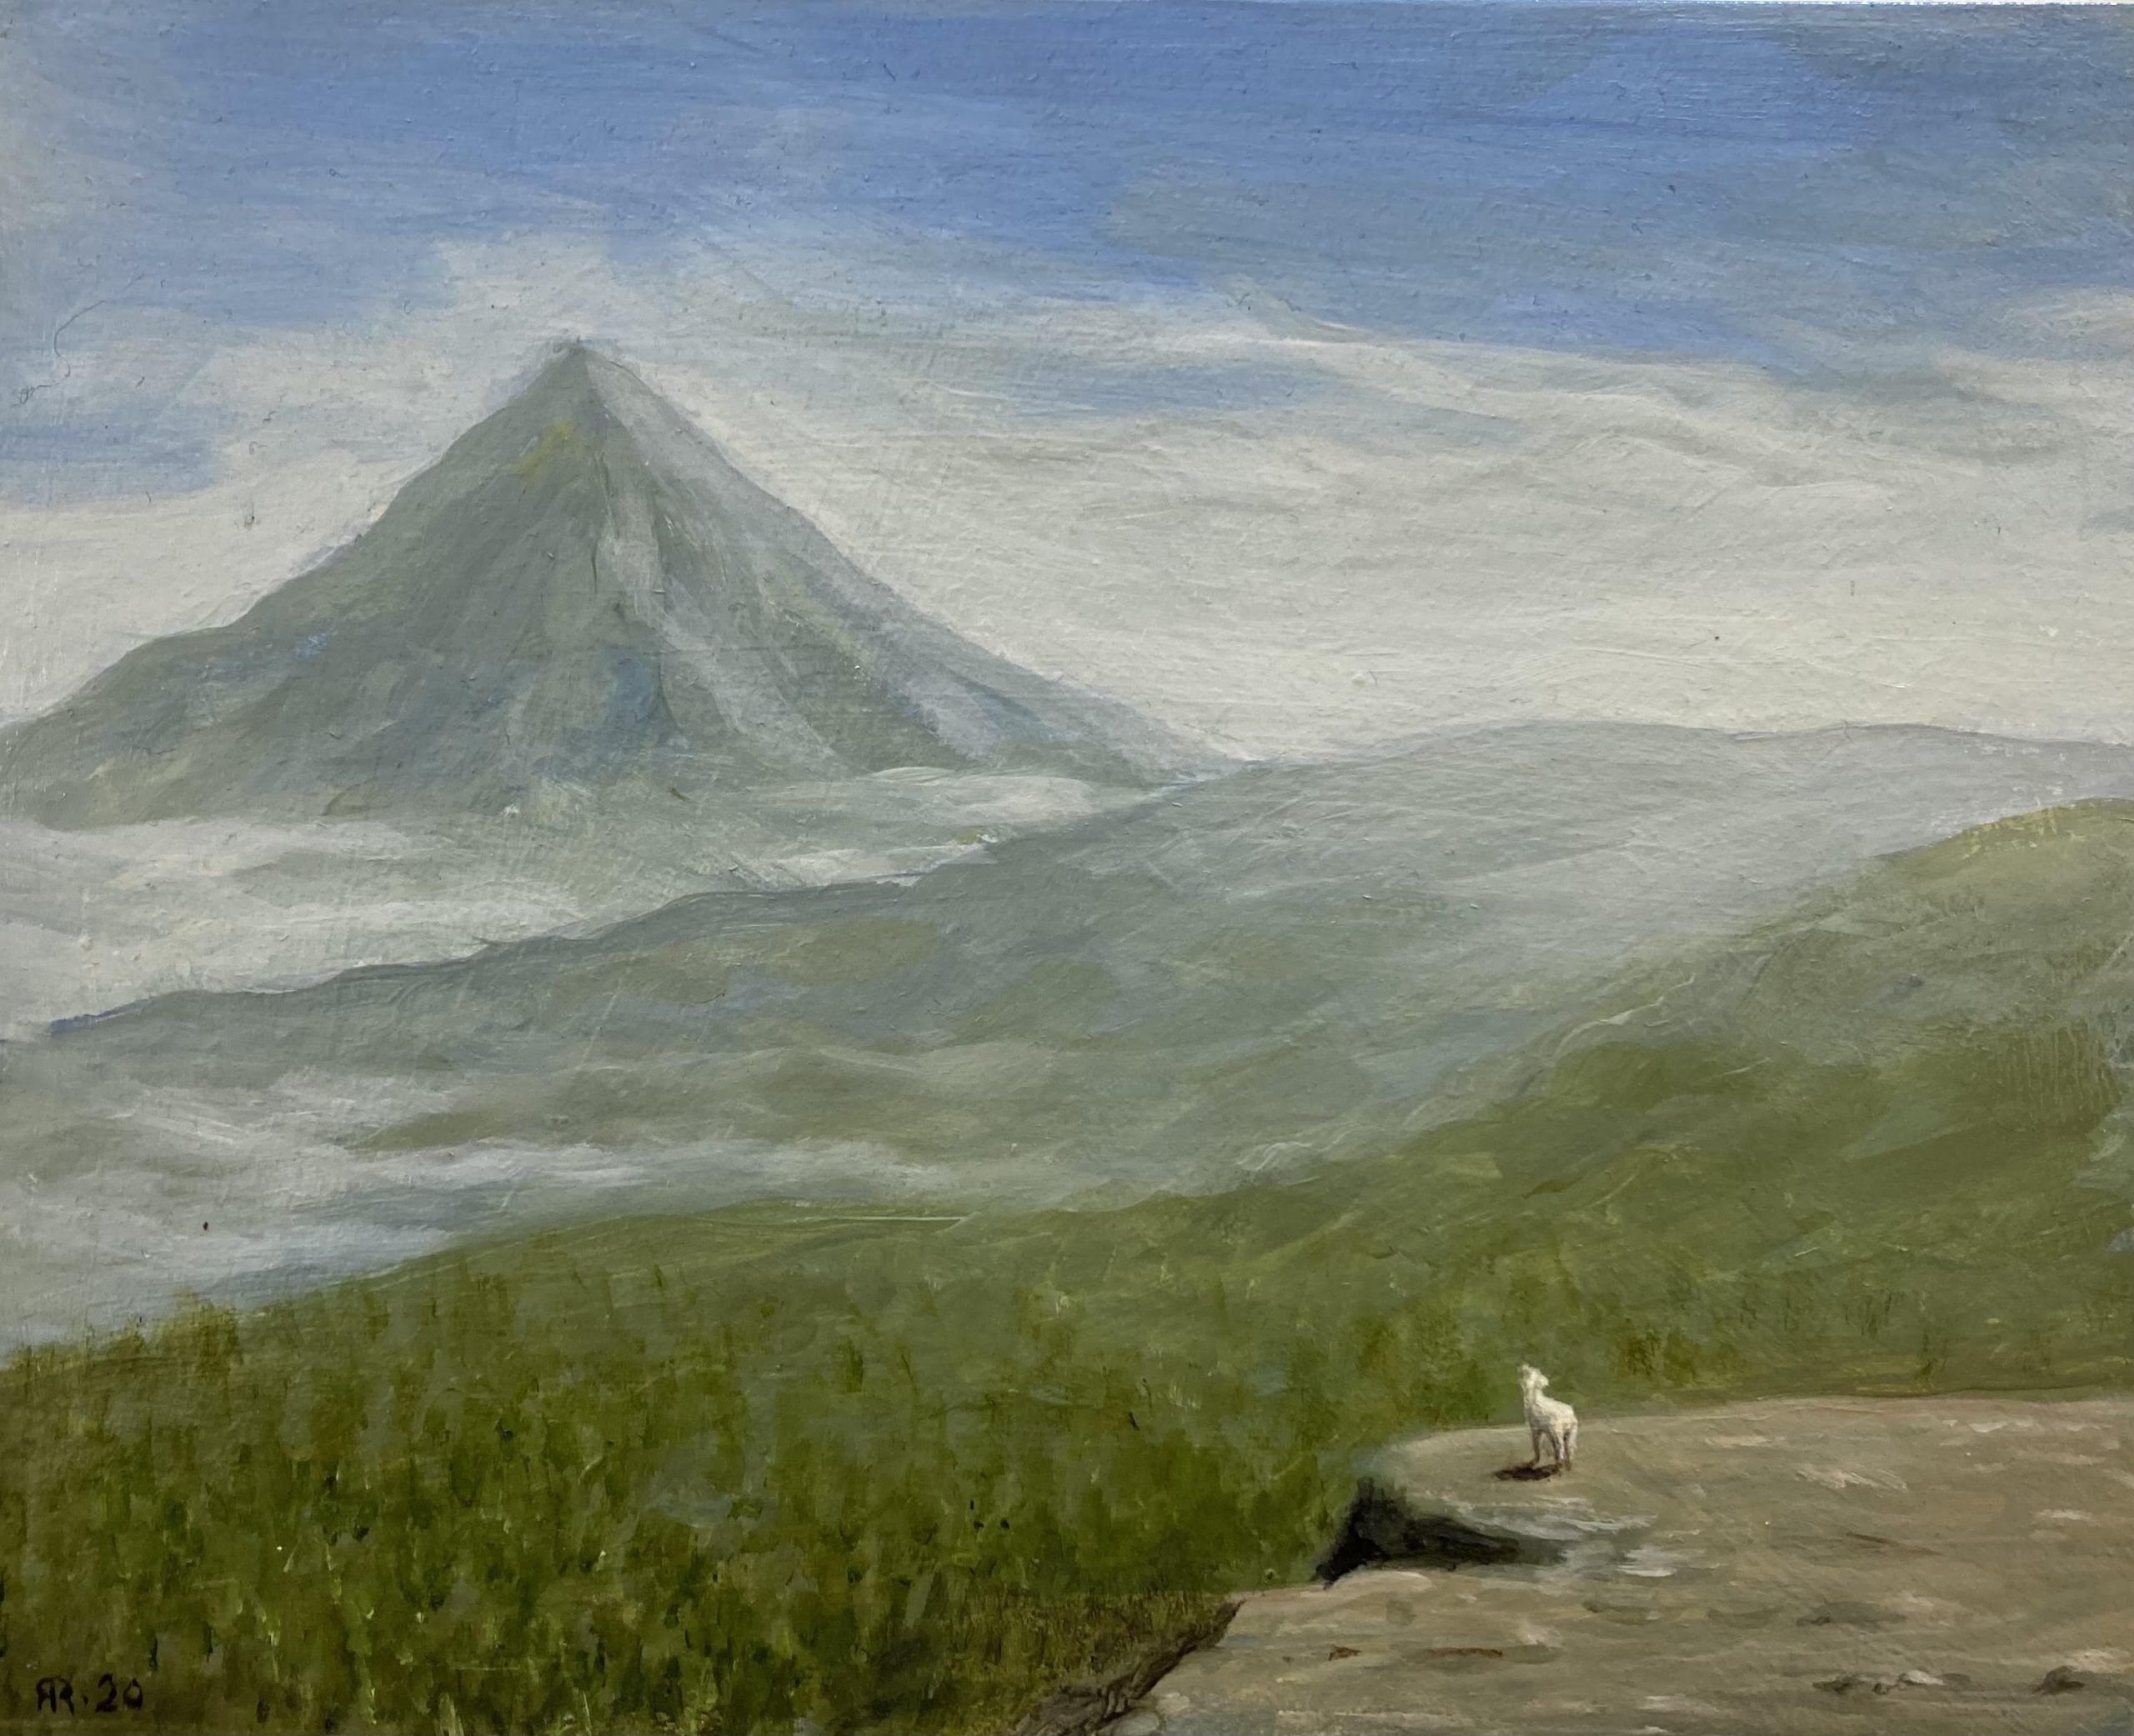 Mountain Crier by Robert Ryan